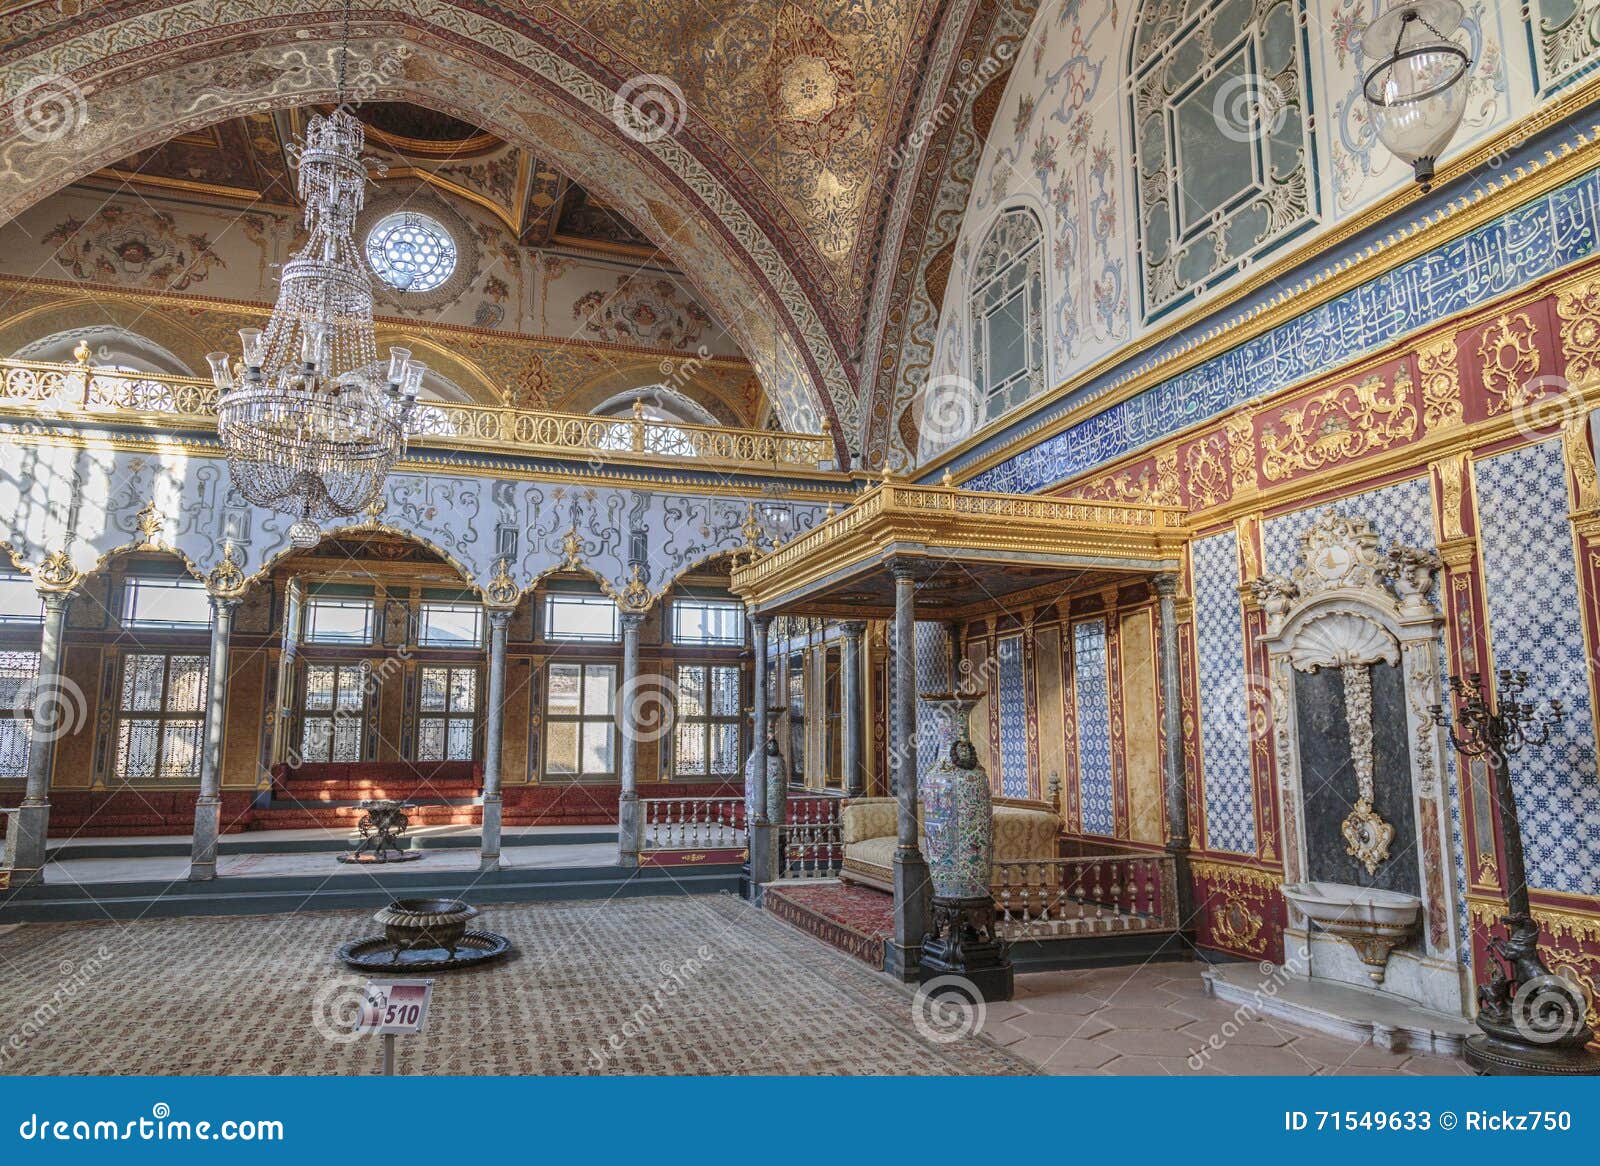 throne room inside harem section of topkapi palace, istanbul, turkey